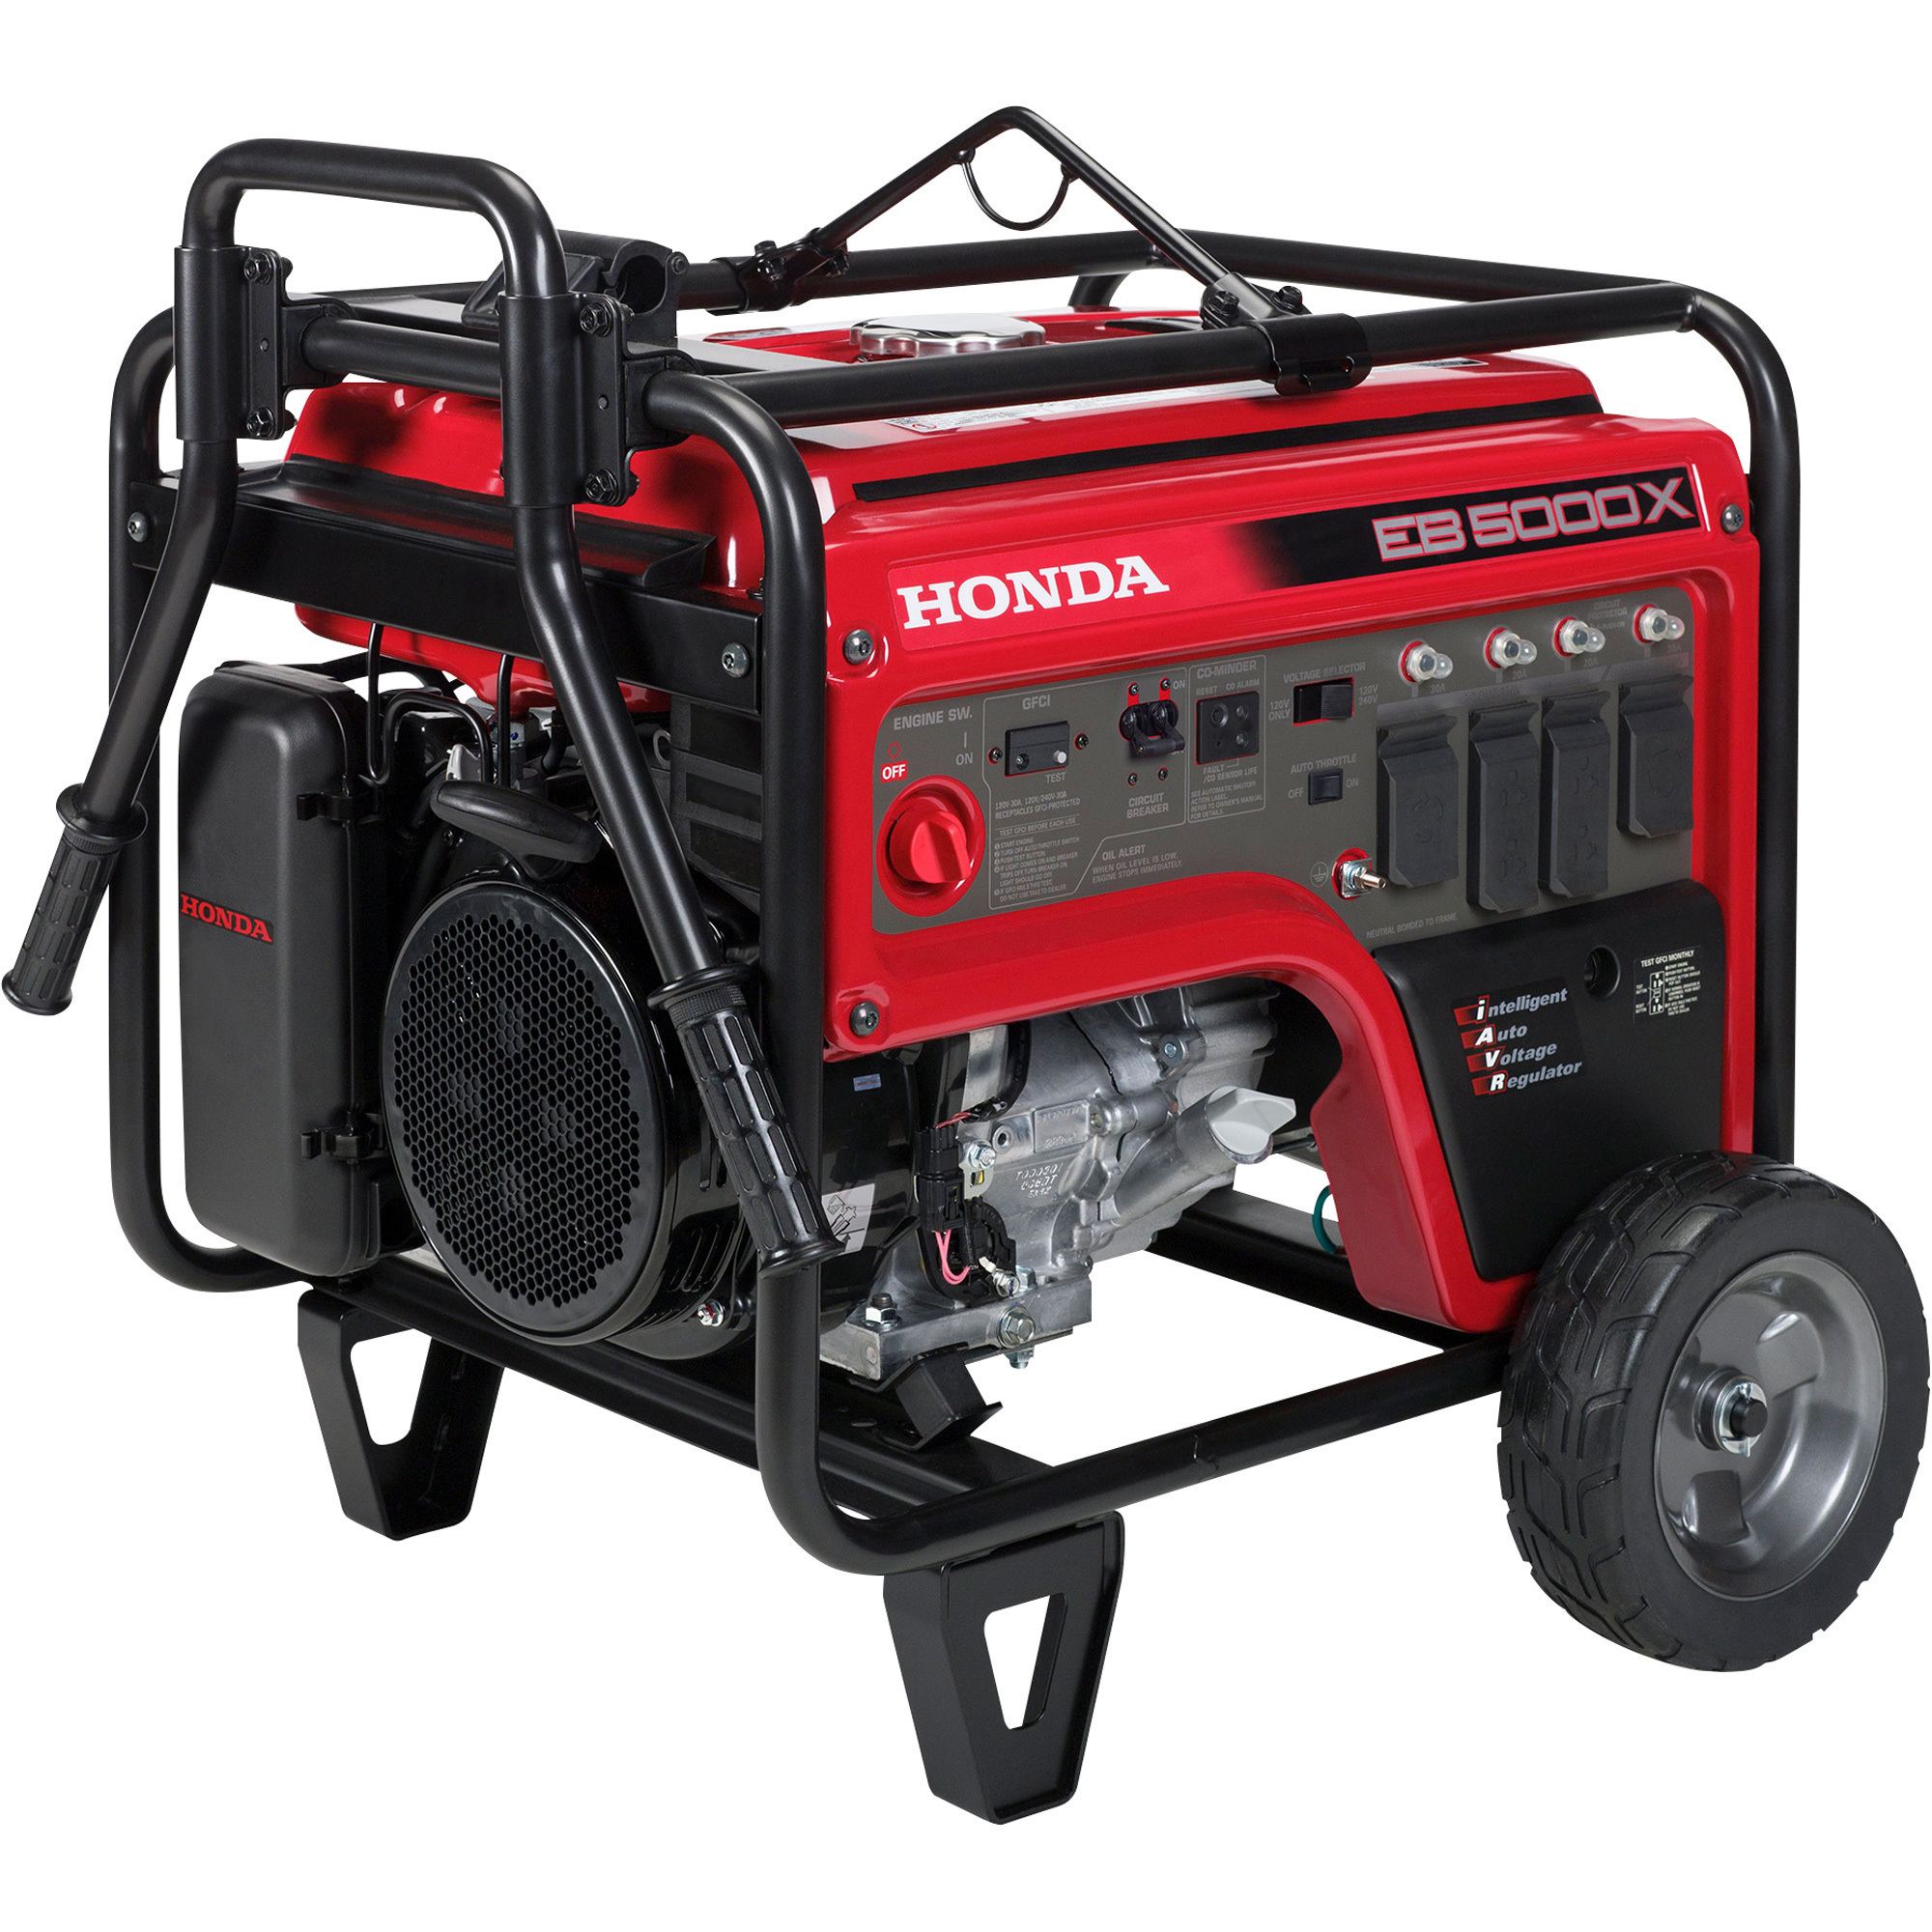 Honda EB5000 iAVR Series Portable Generator, 5000 Surge Watts, 4500 Rated Watts, Model EB5000XK3AN